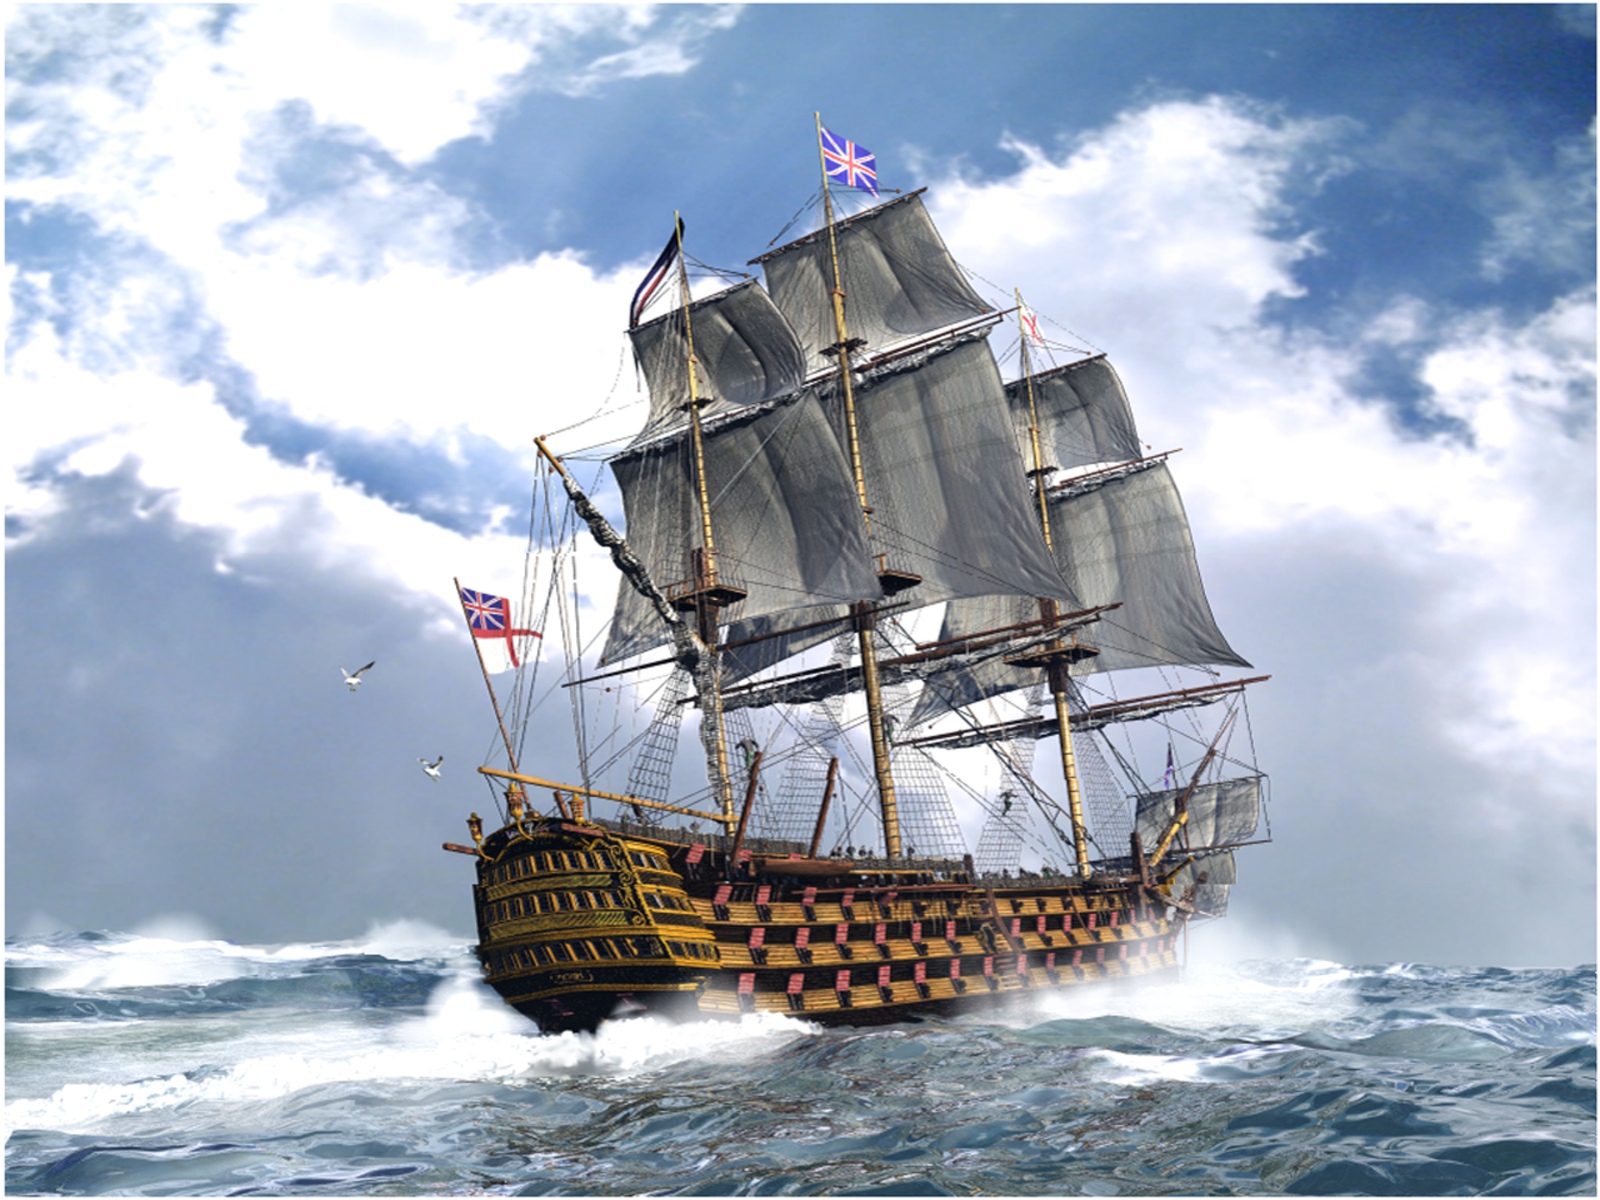  decoration Free 3D Sailing Ship 1600 x 1200 Pixel HD Wallpapers